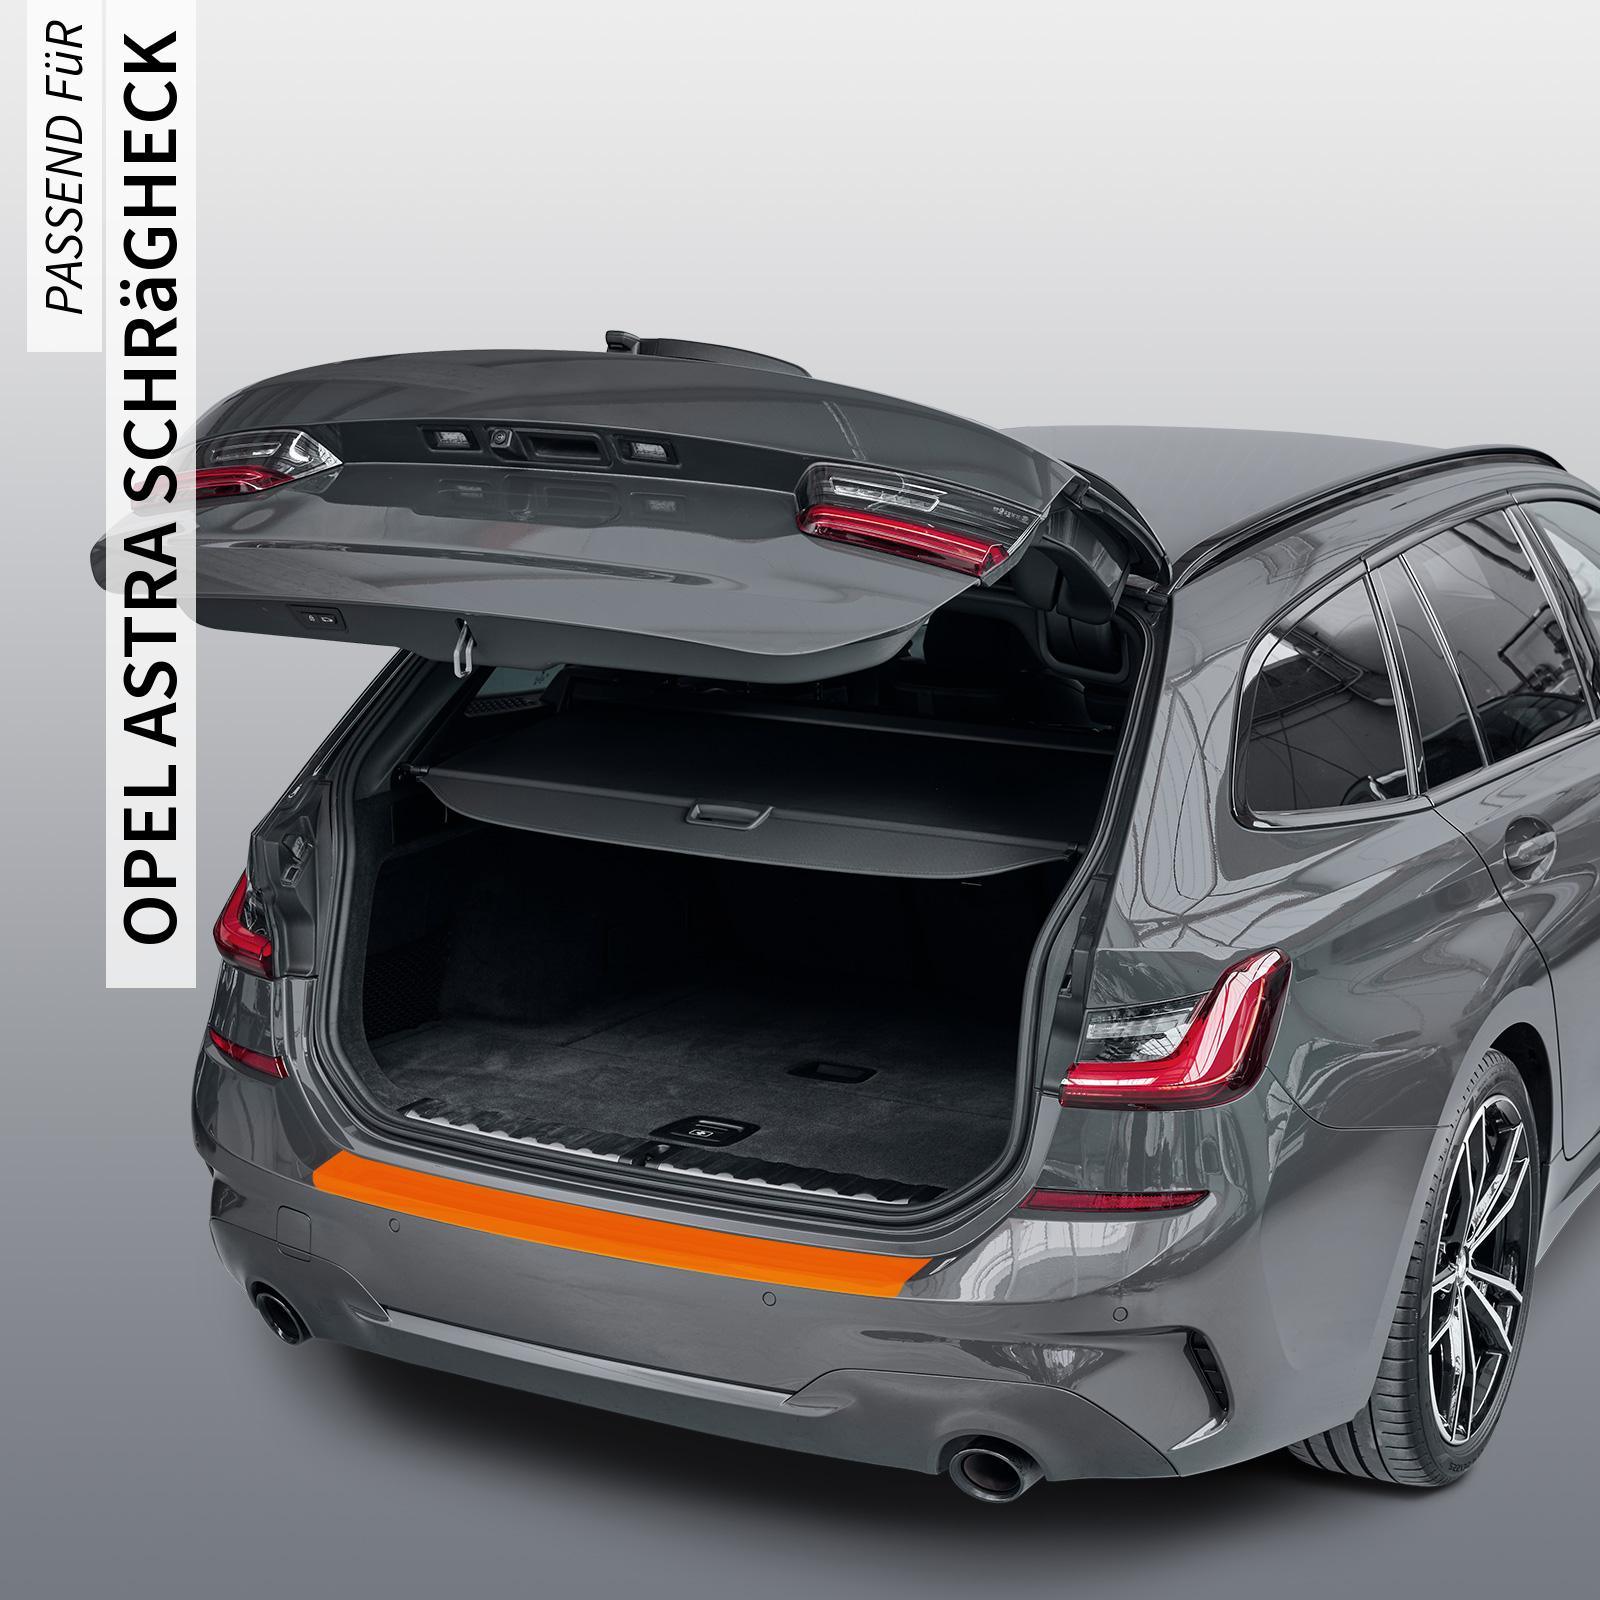 Ladekantenschutzfolie - Transparent Glatt MATT 110 µm stark  für Opel Astra Schrägheck Typ J, BJ 12/2009-2015